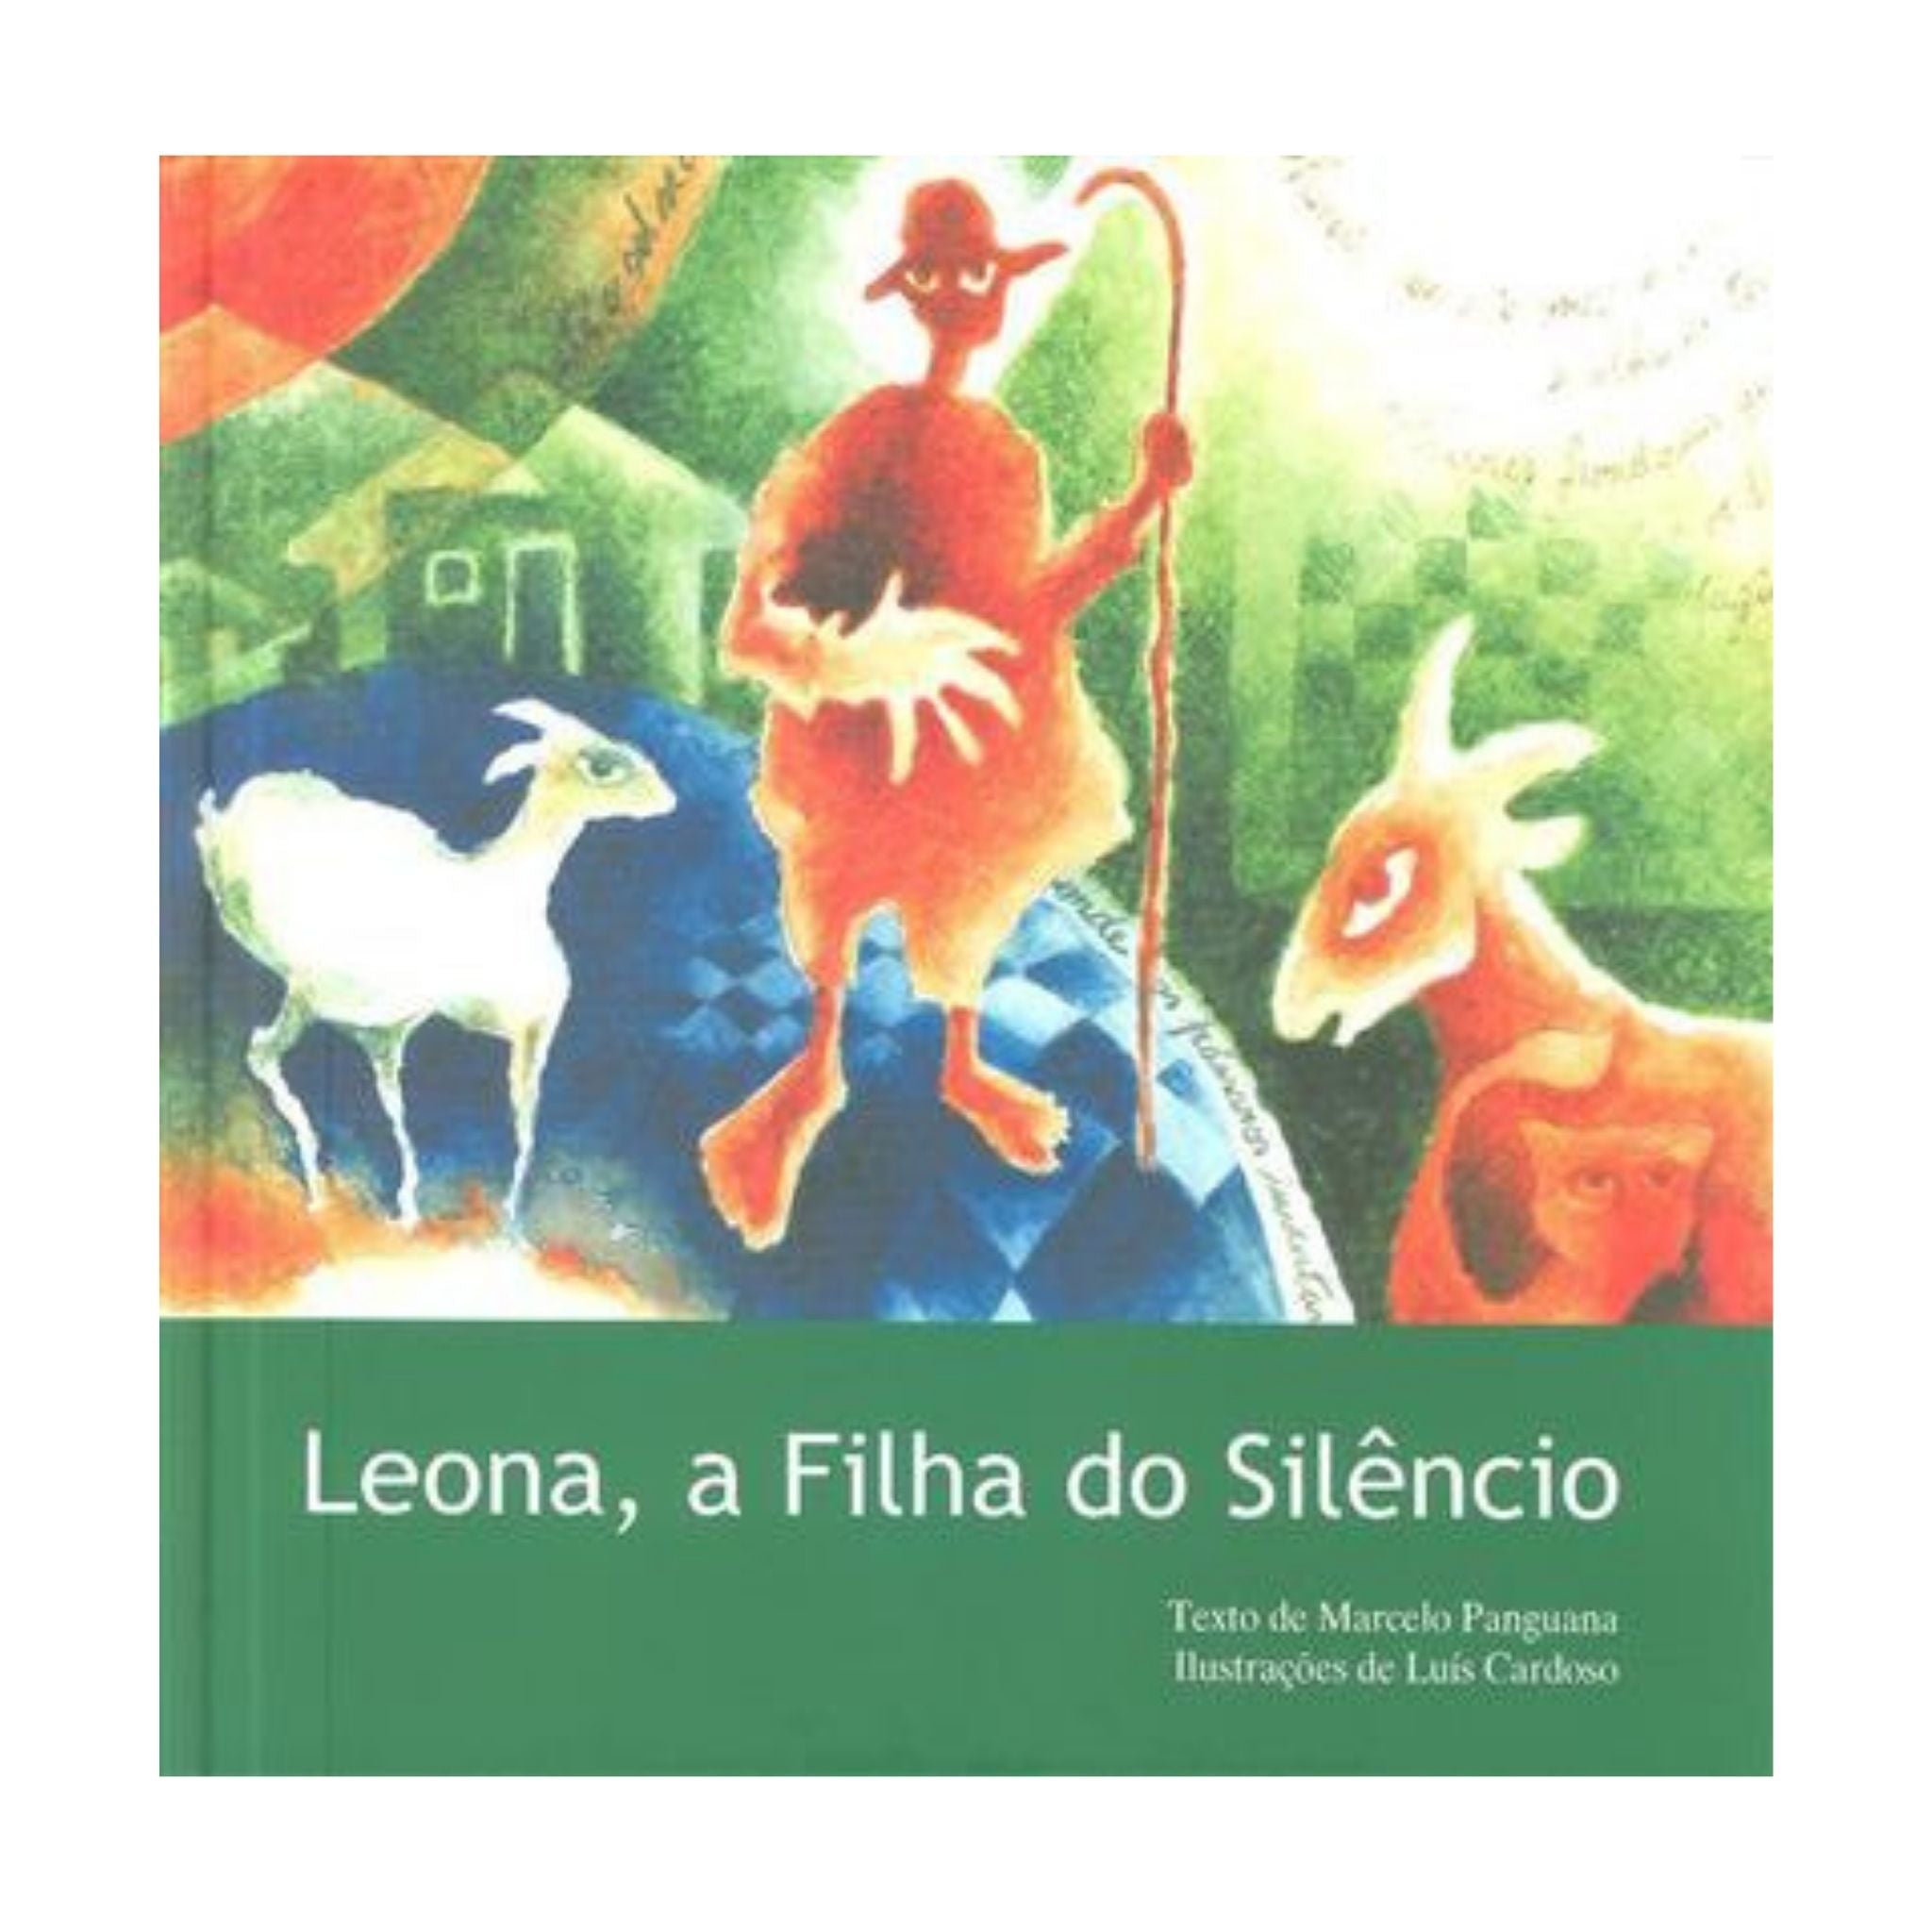 Leona, a filha do silêncio